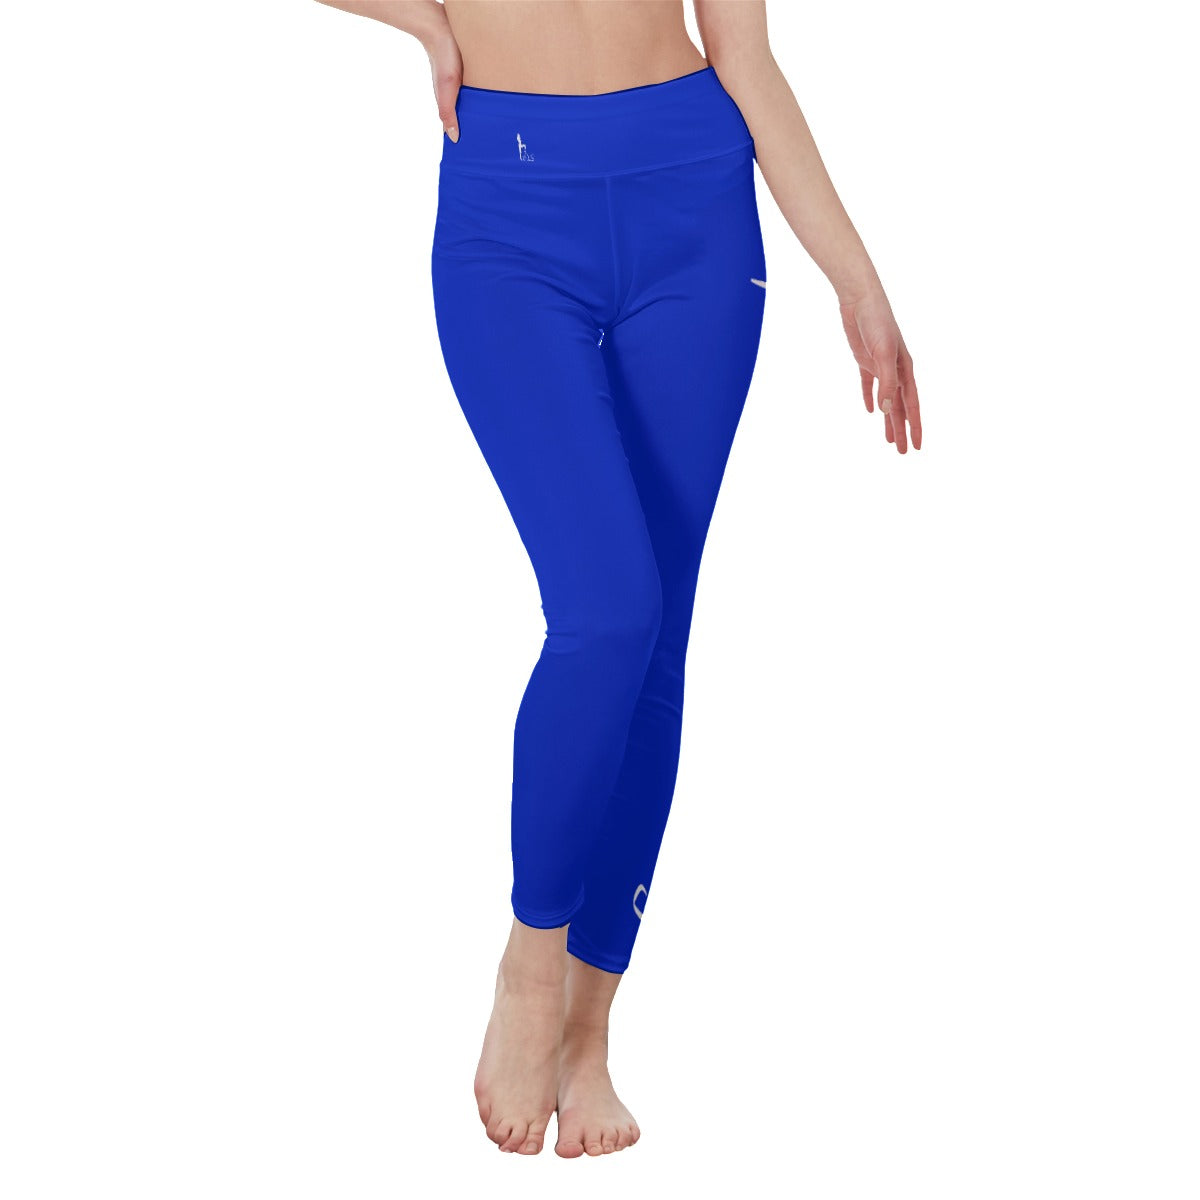 👖 Oficialmente Sexy Colors Collection Persian Blue With White Logo Women's High Waist Leggings Color #0227D0 👖